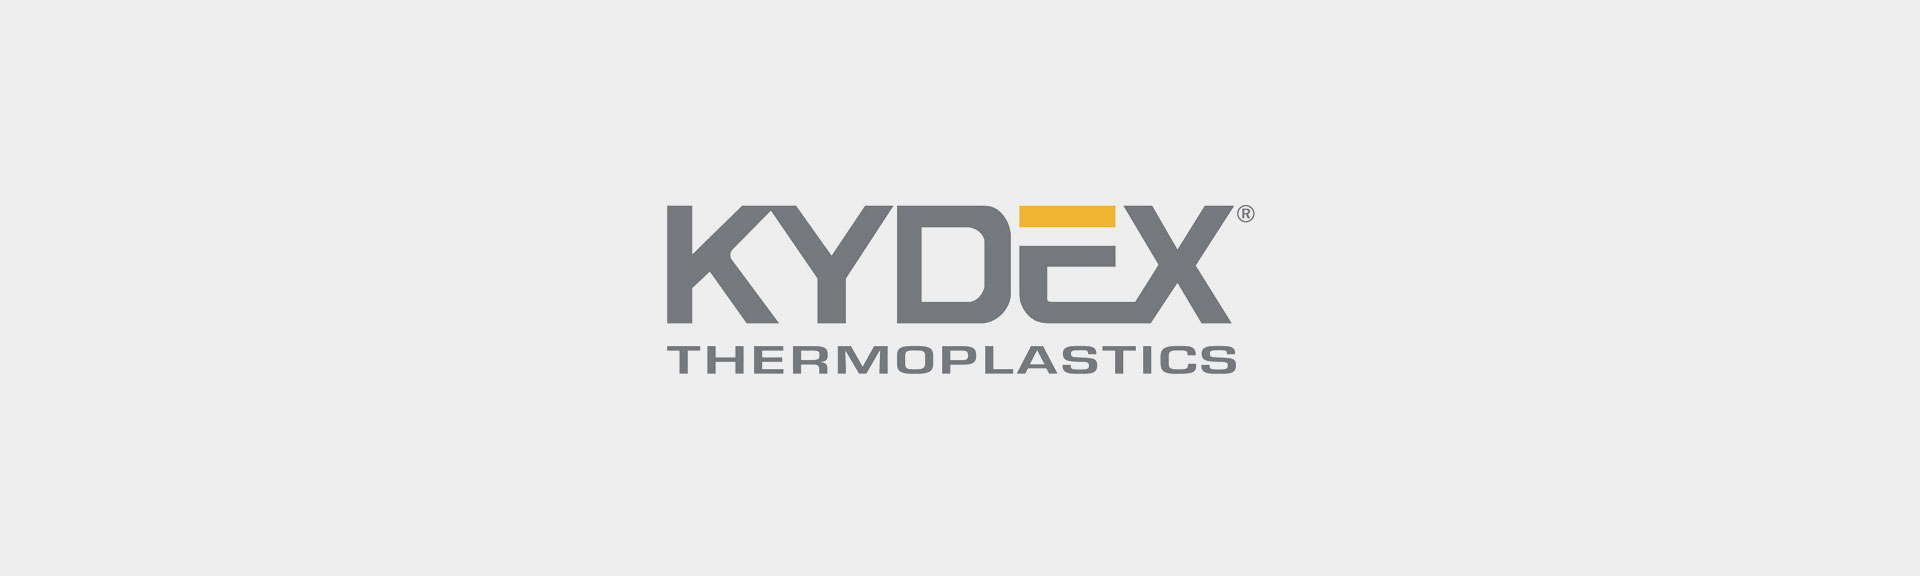 Kydex Thermoplastics